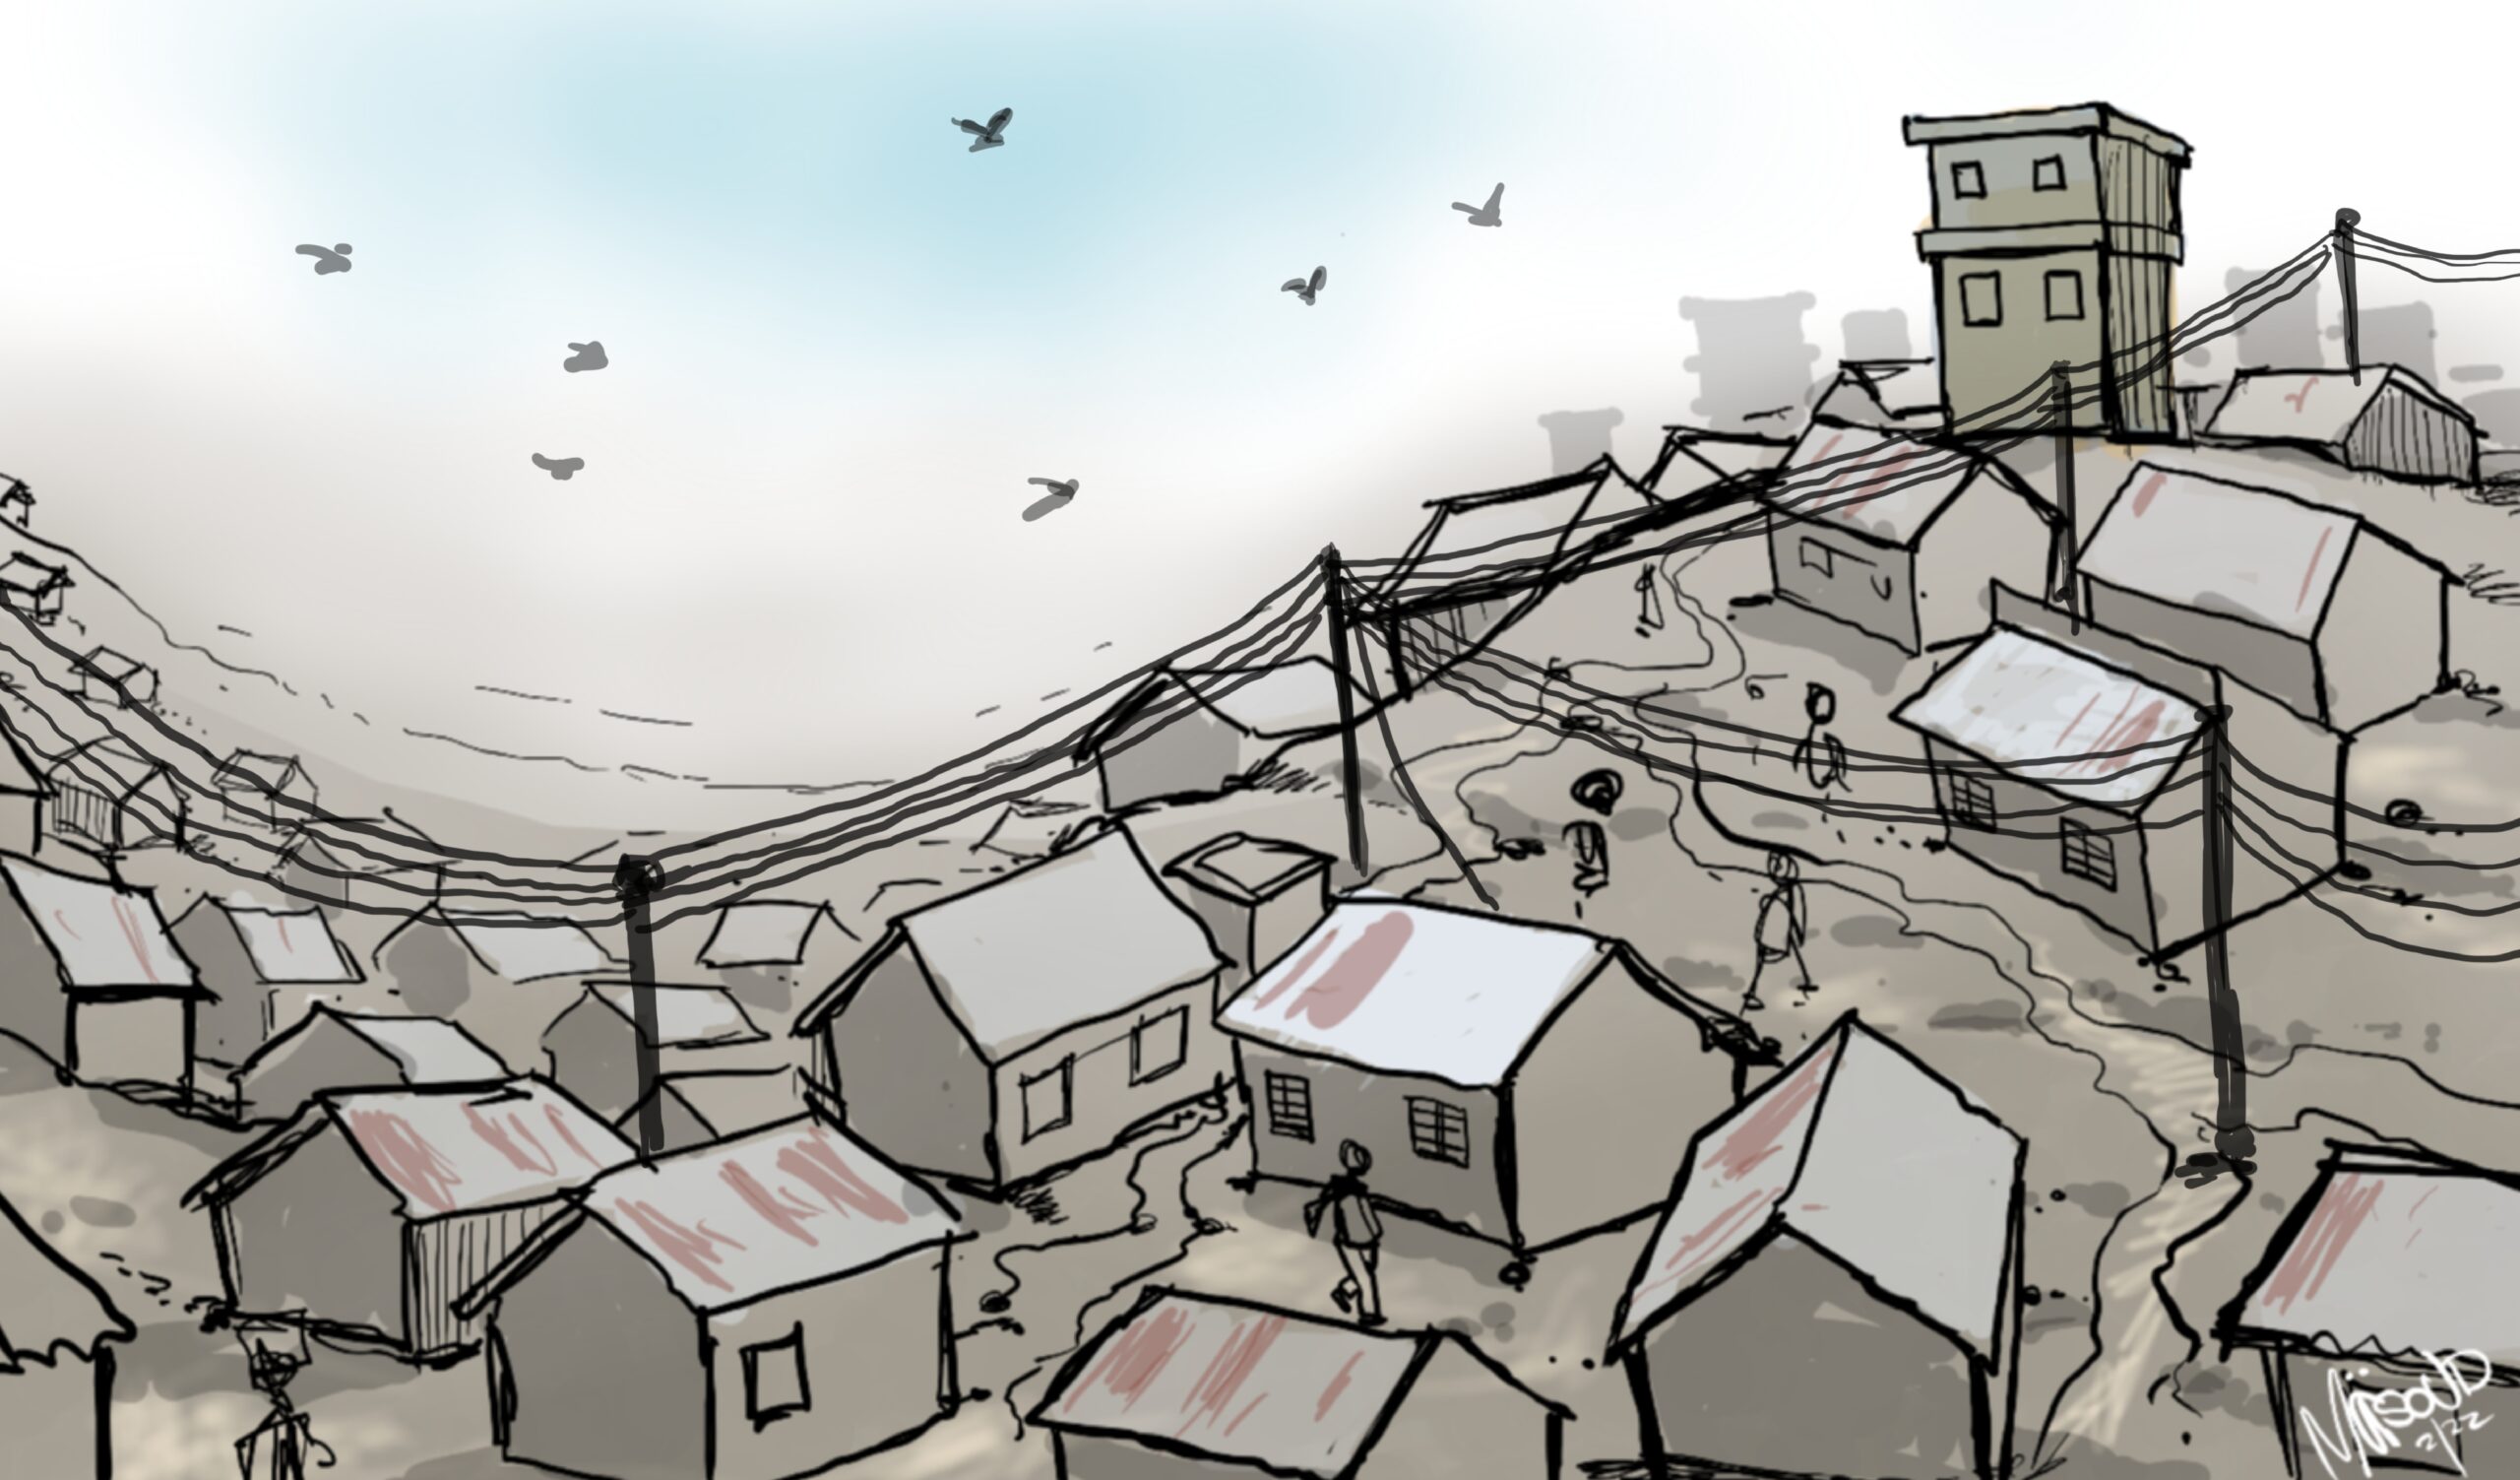 Urban planning public awareness campaign cartoon series by Masoud